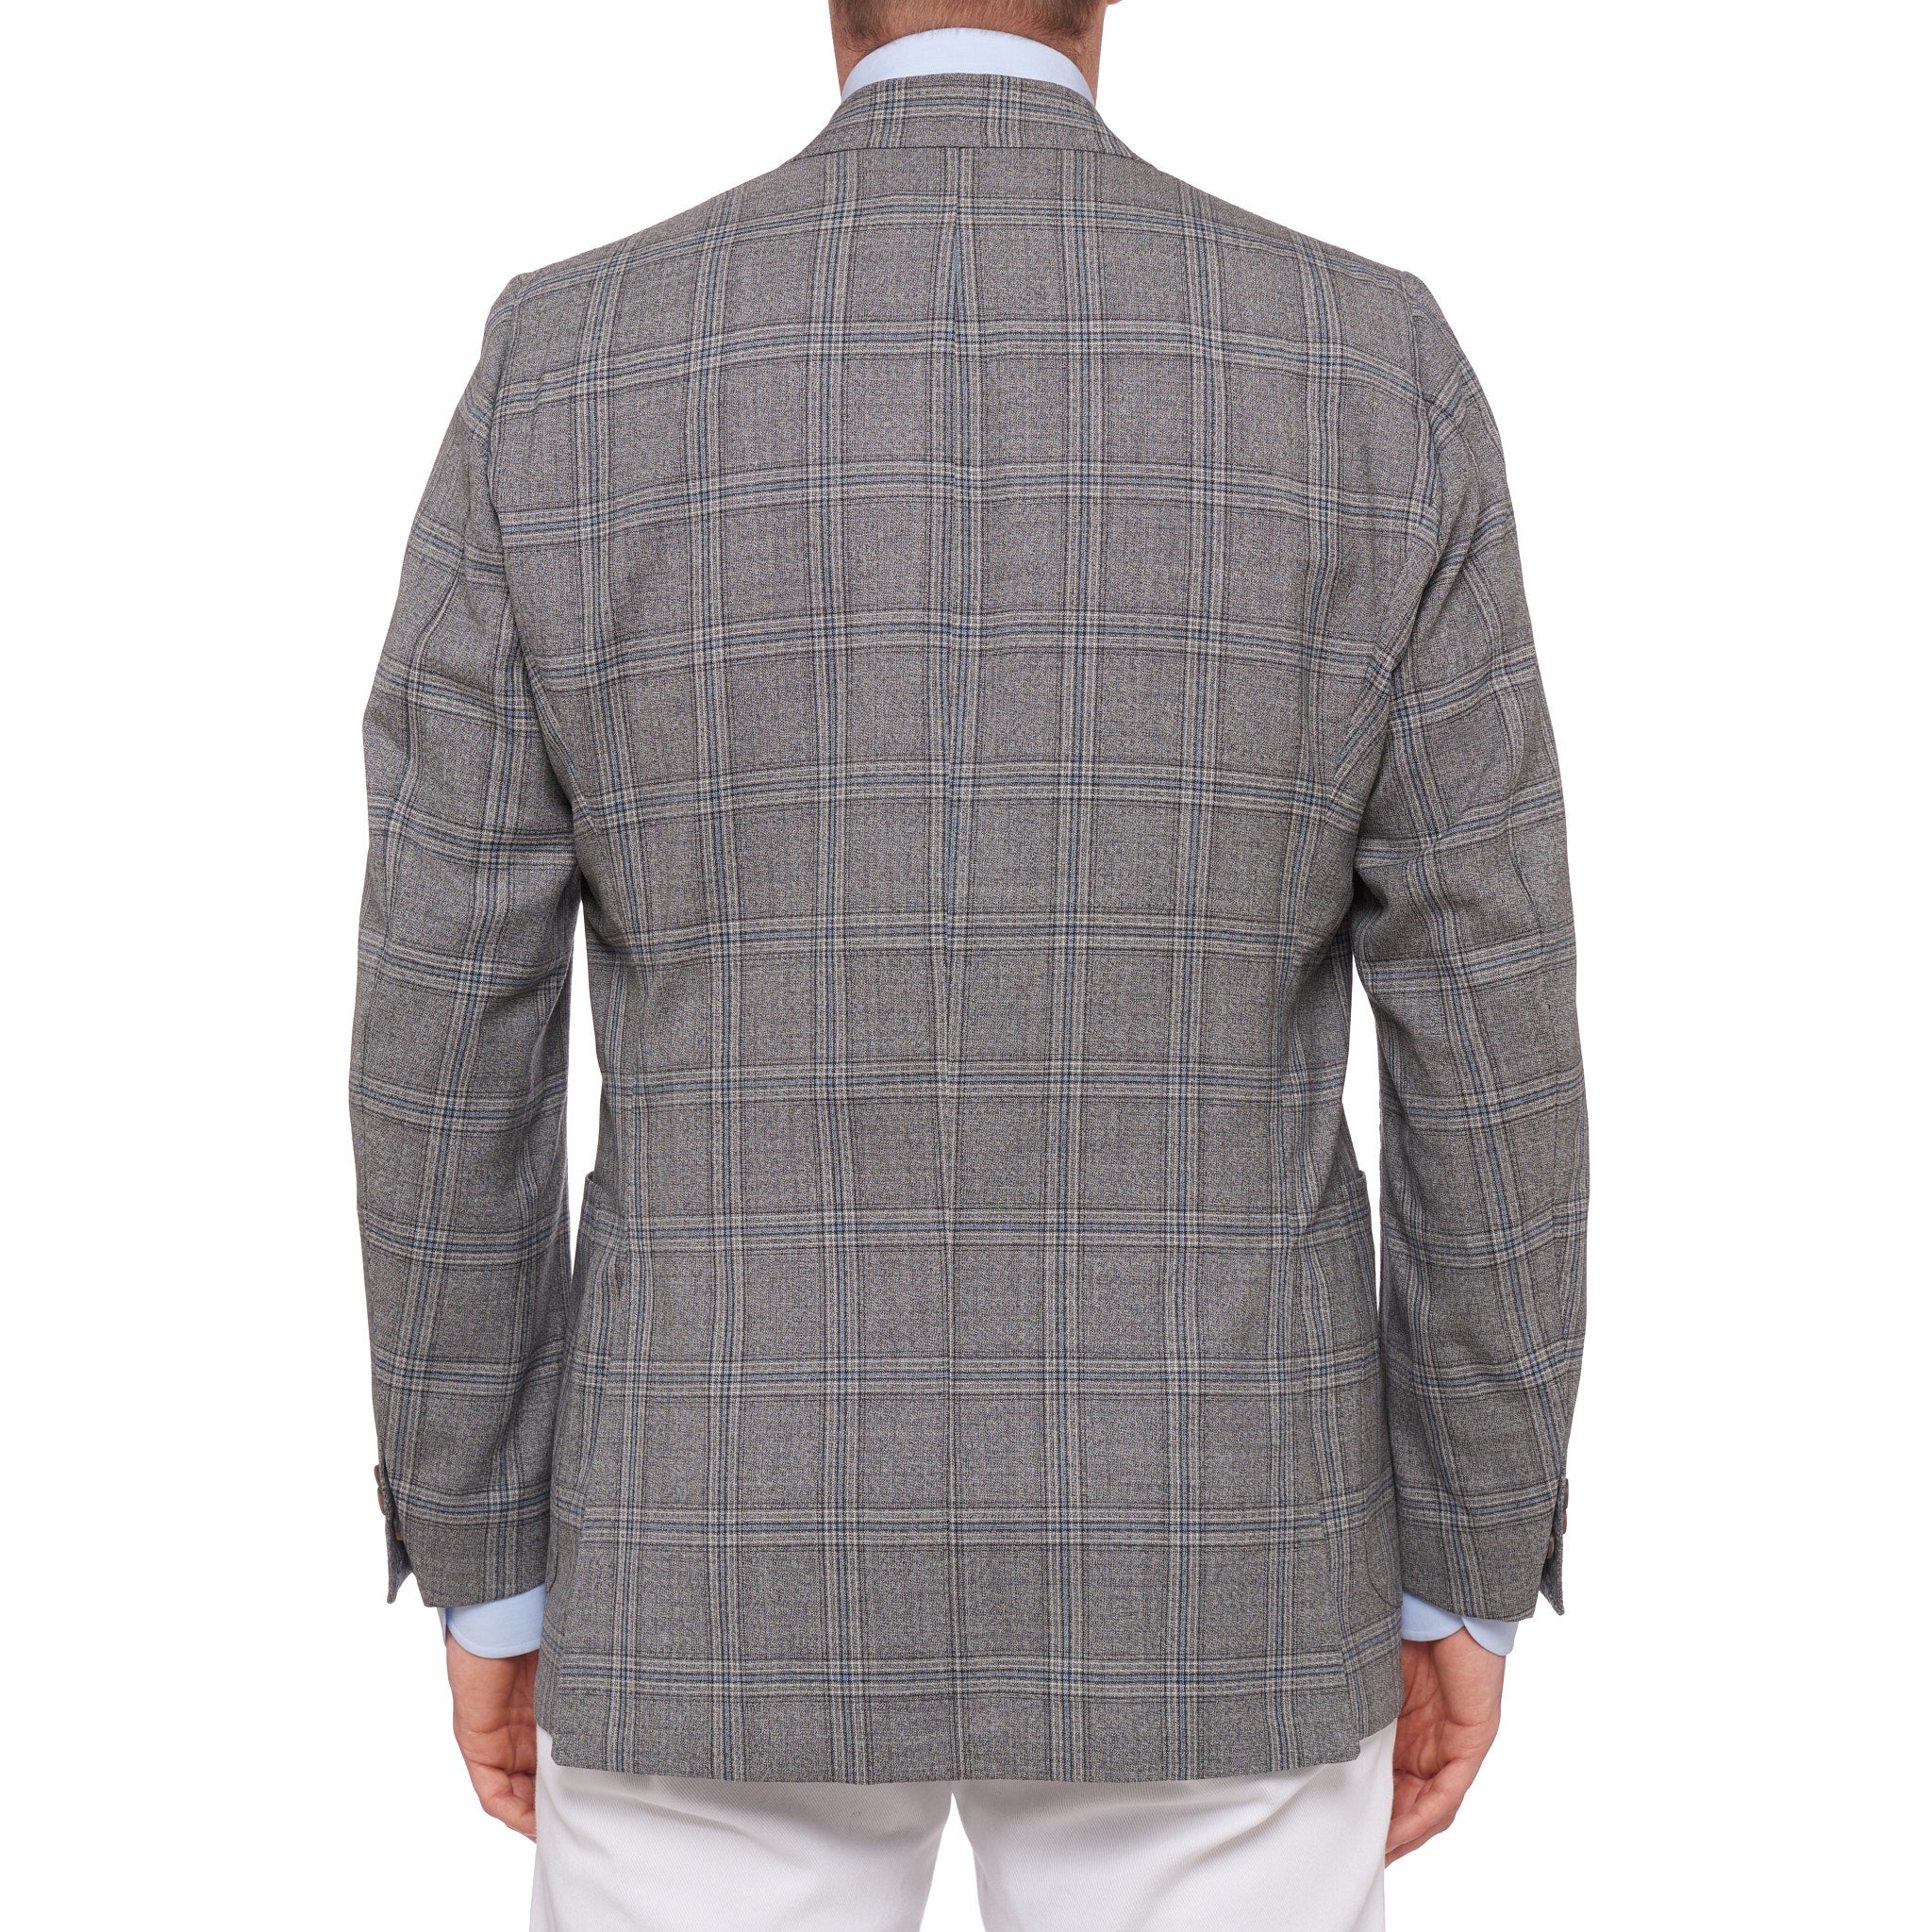 RUBINACCI LH Bespoke Hand Made Gray Plaid Wool DB Blazer Jacket EU 50 NEW US 40 RUBINACCI